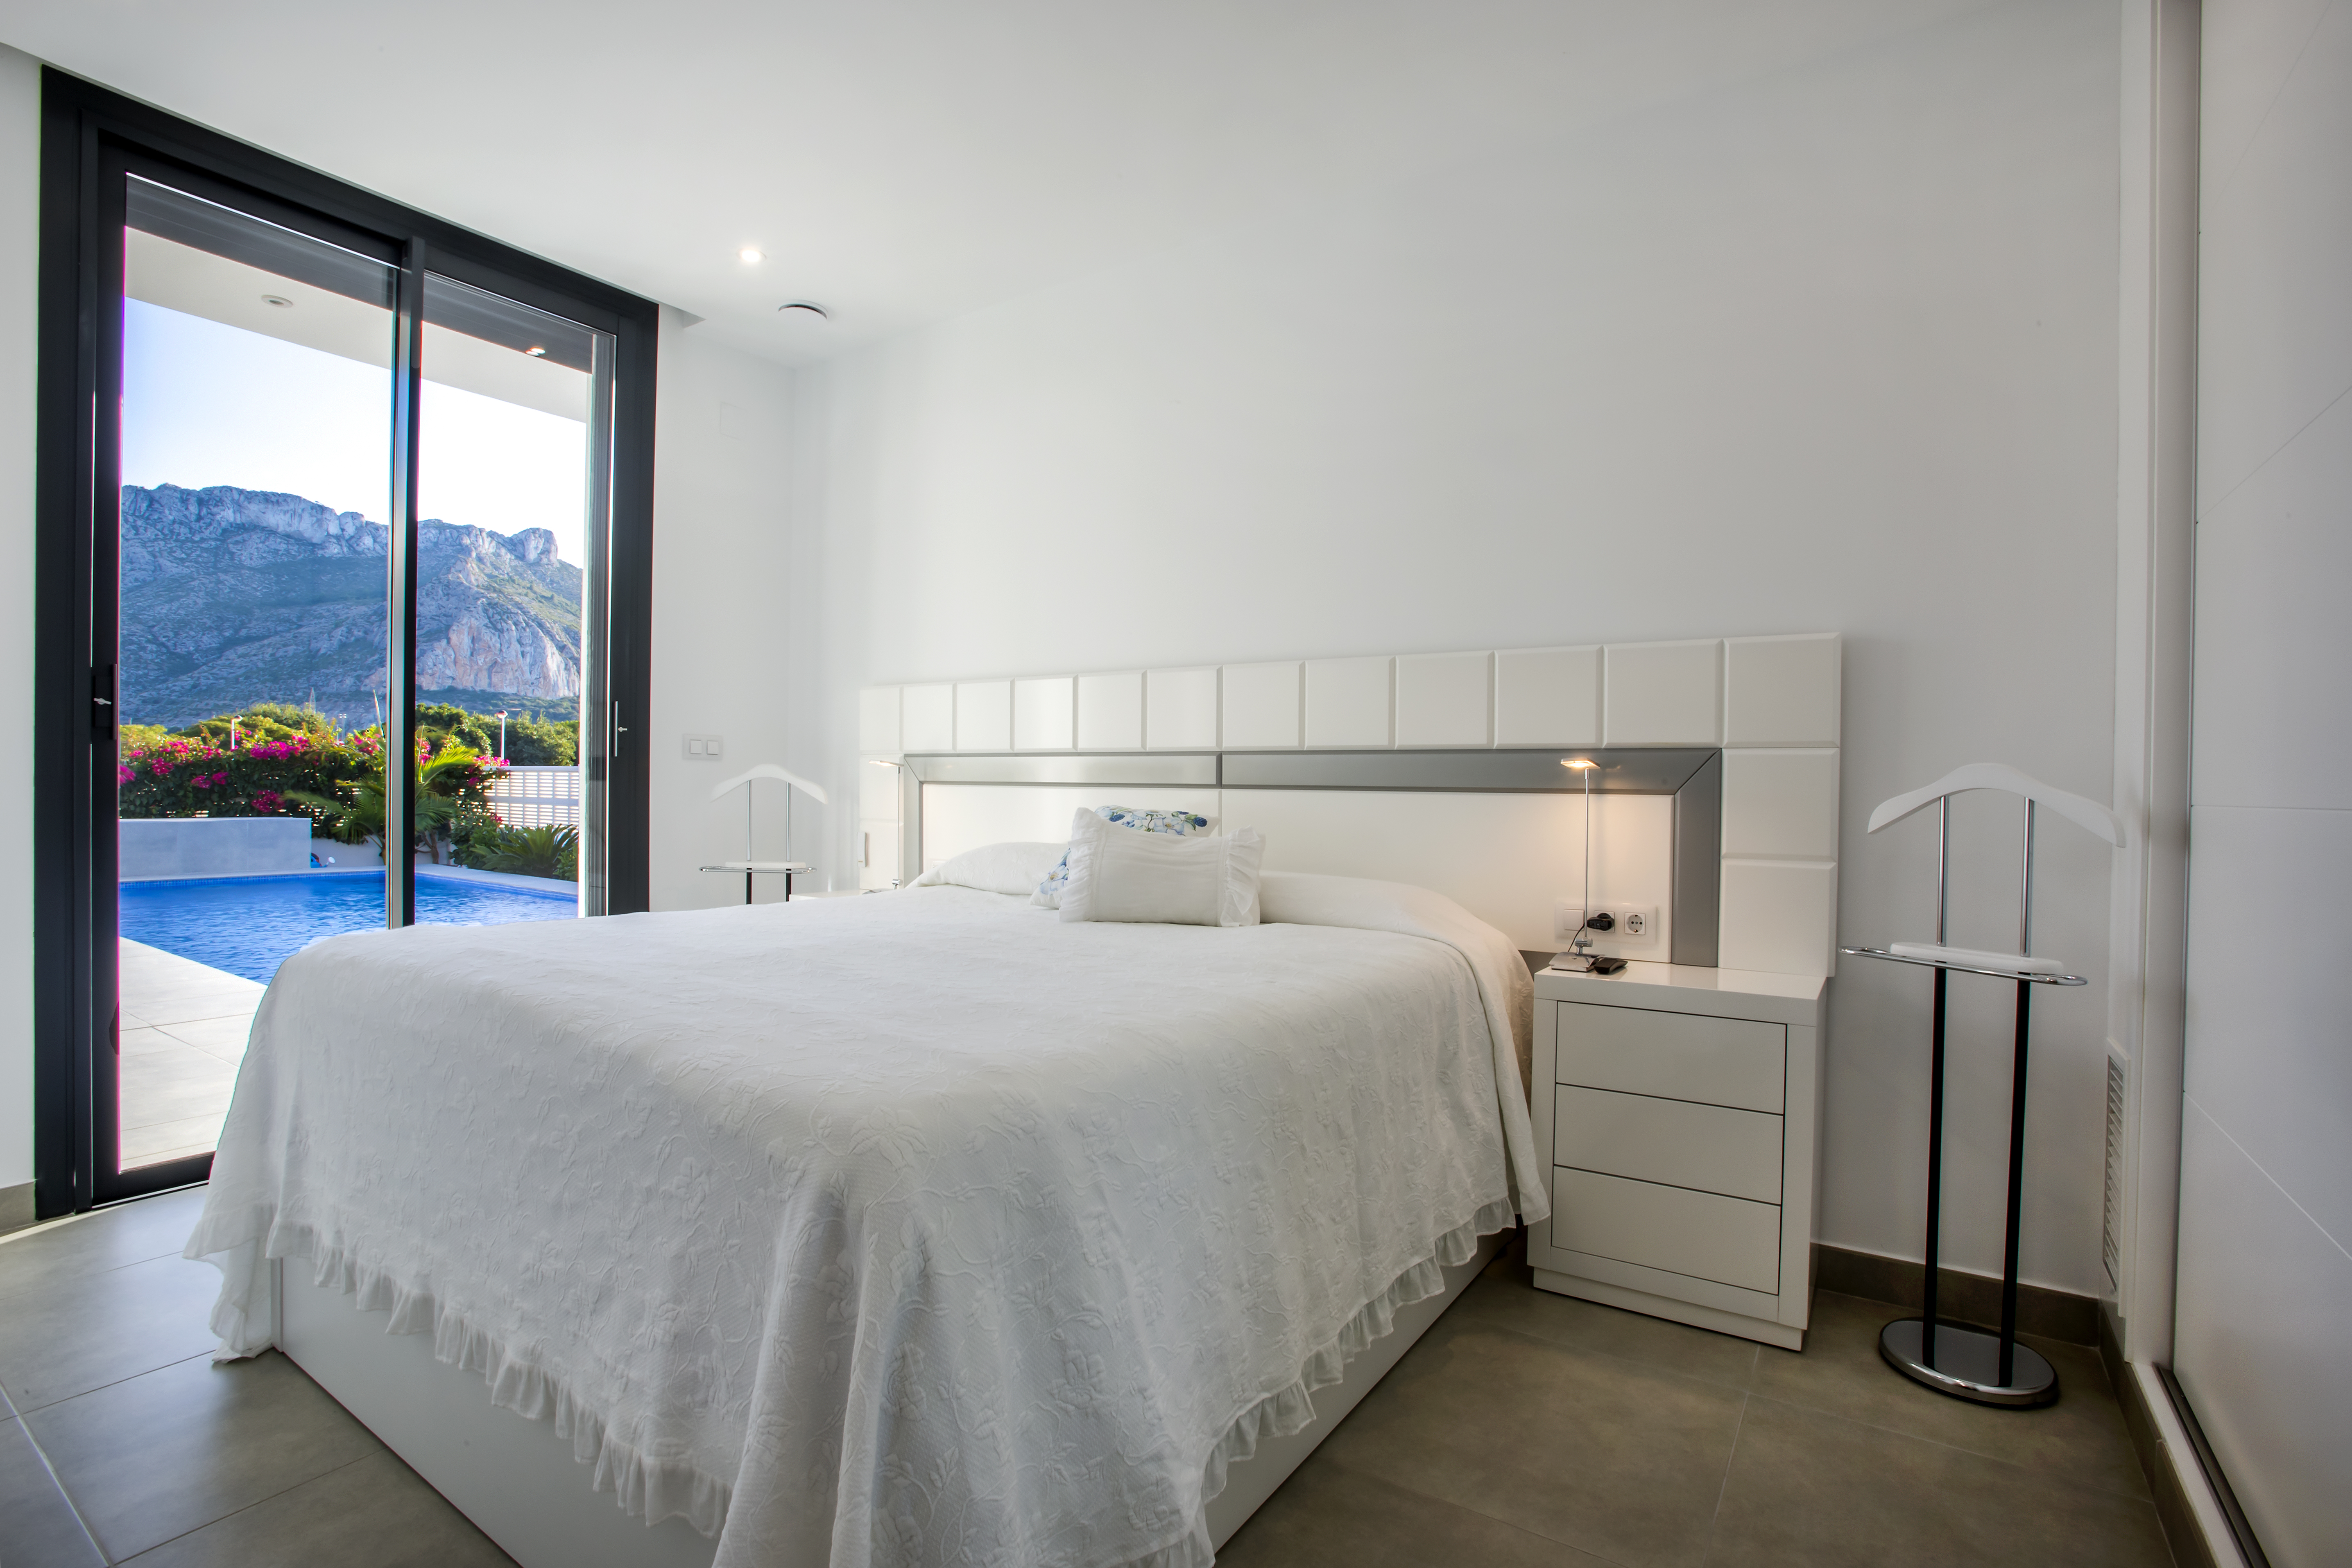 New 3 bedroom modern design villa with swimming pool